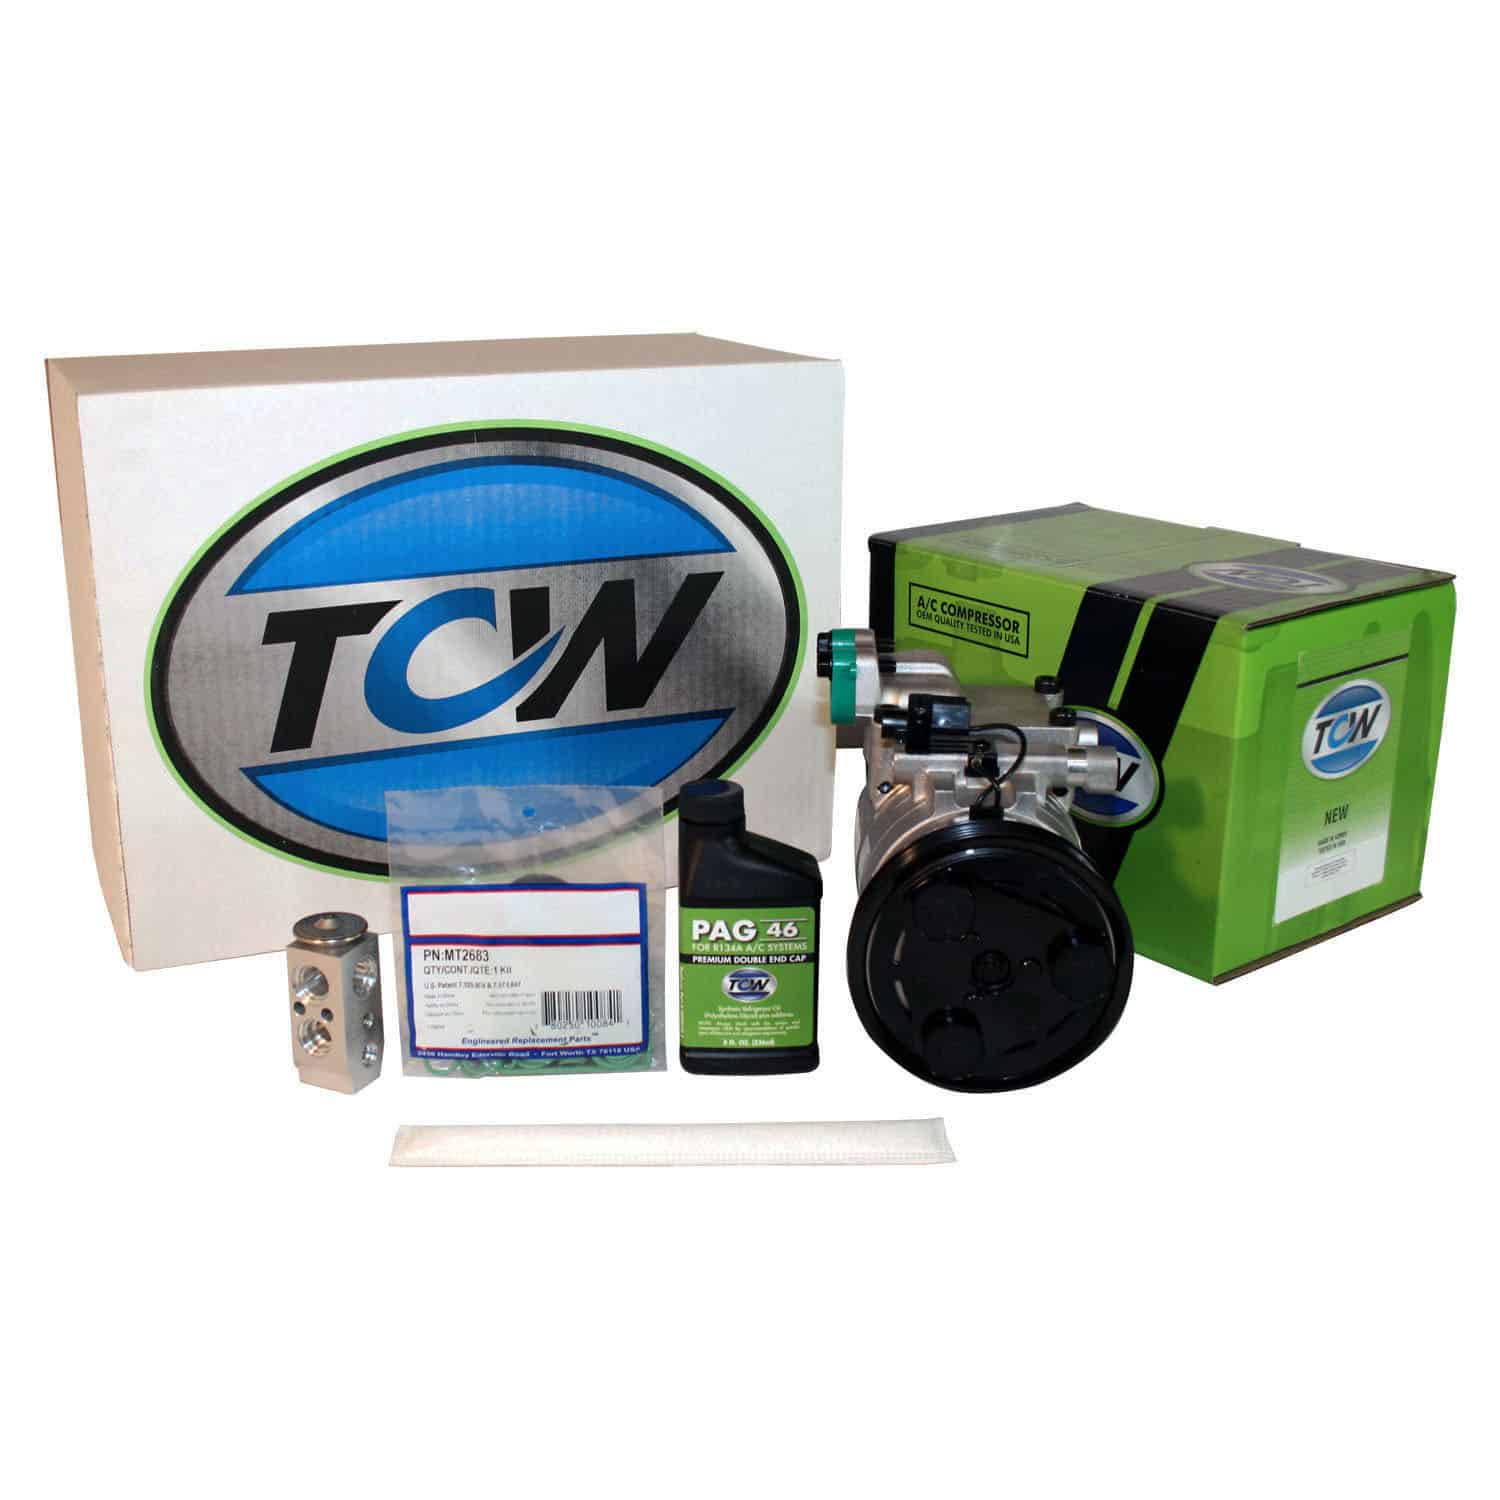 TCW Vehicle A/C Kit K1000455N New Product Image field_60b6a13a6e67c